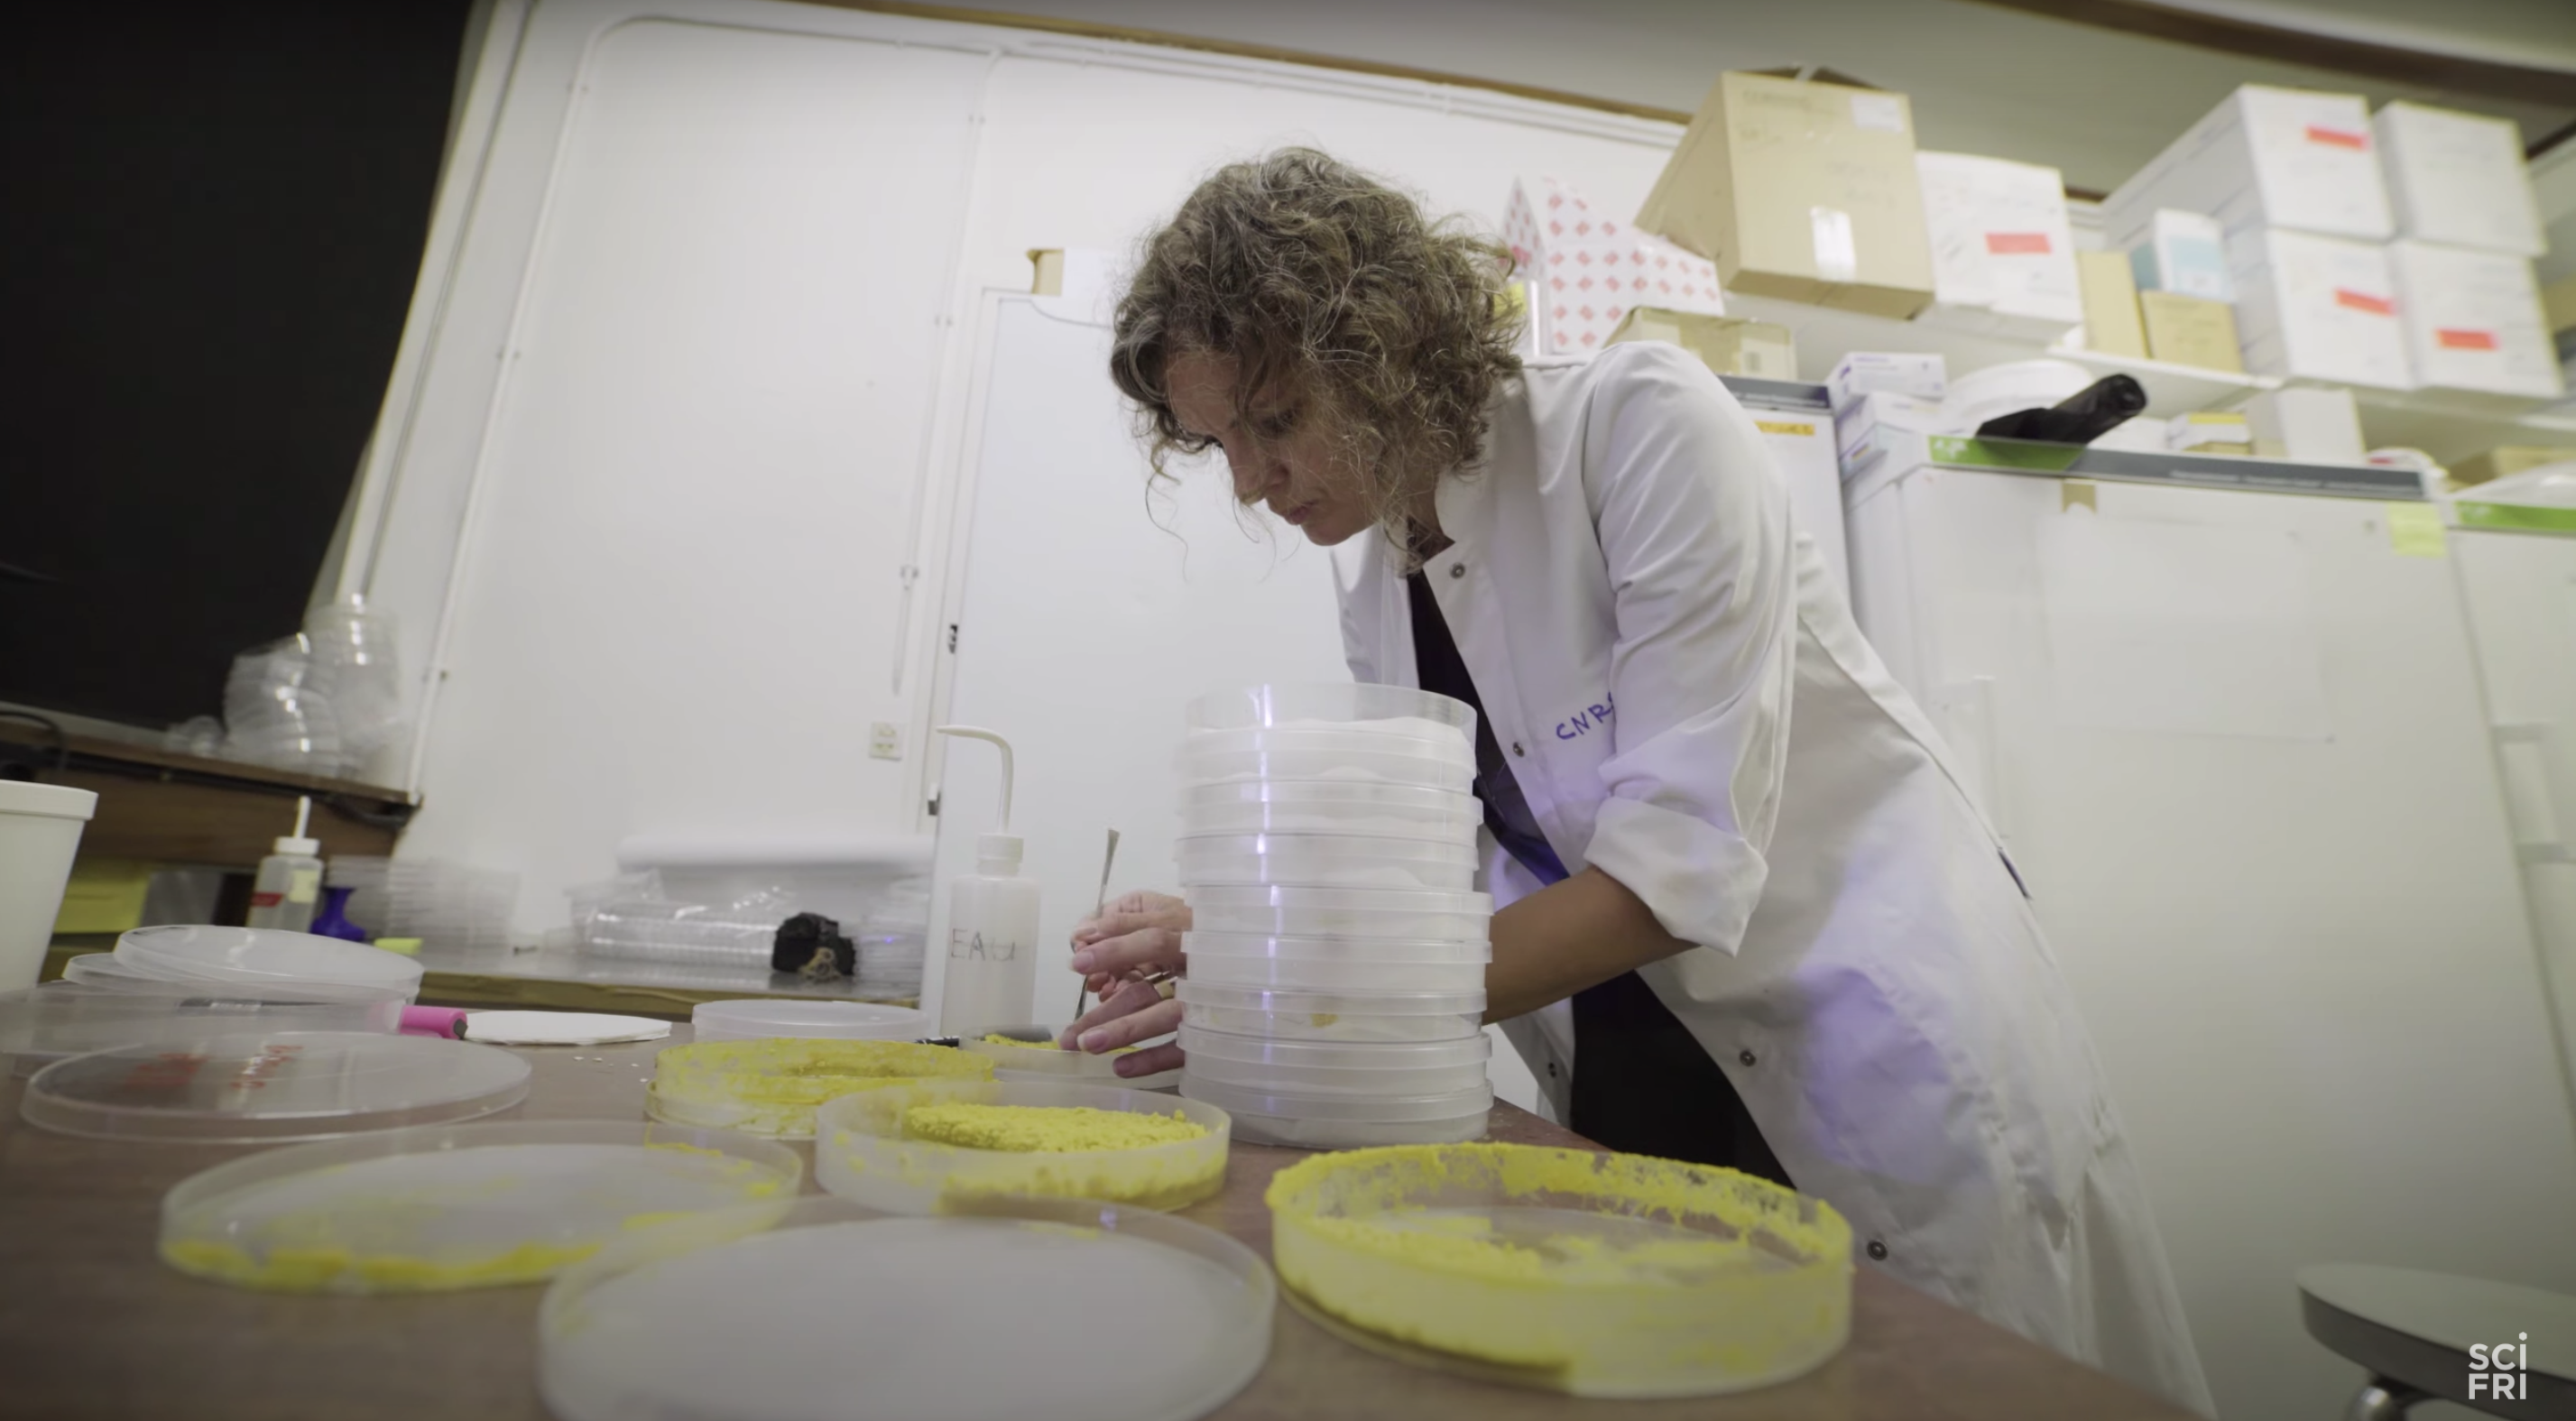 Audrey Dussutour setting up a slime mold experiment